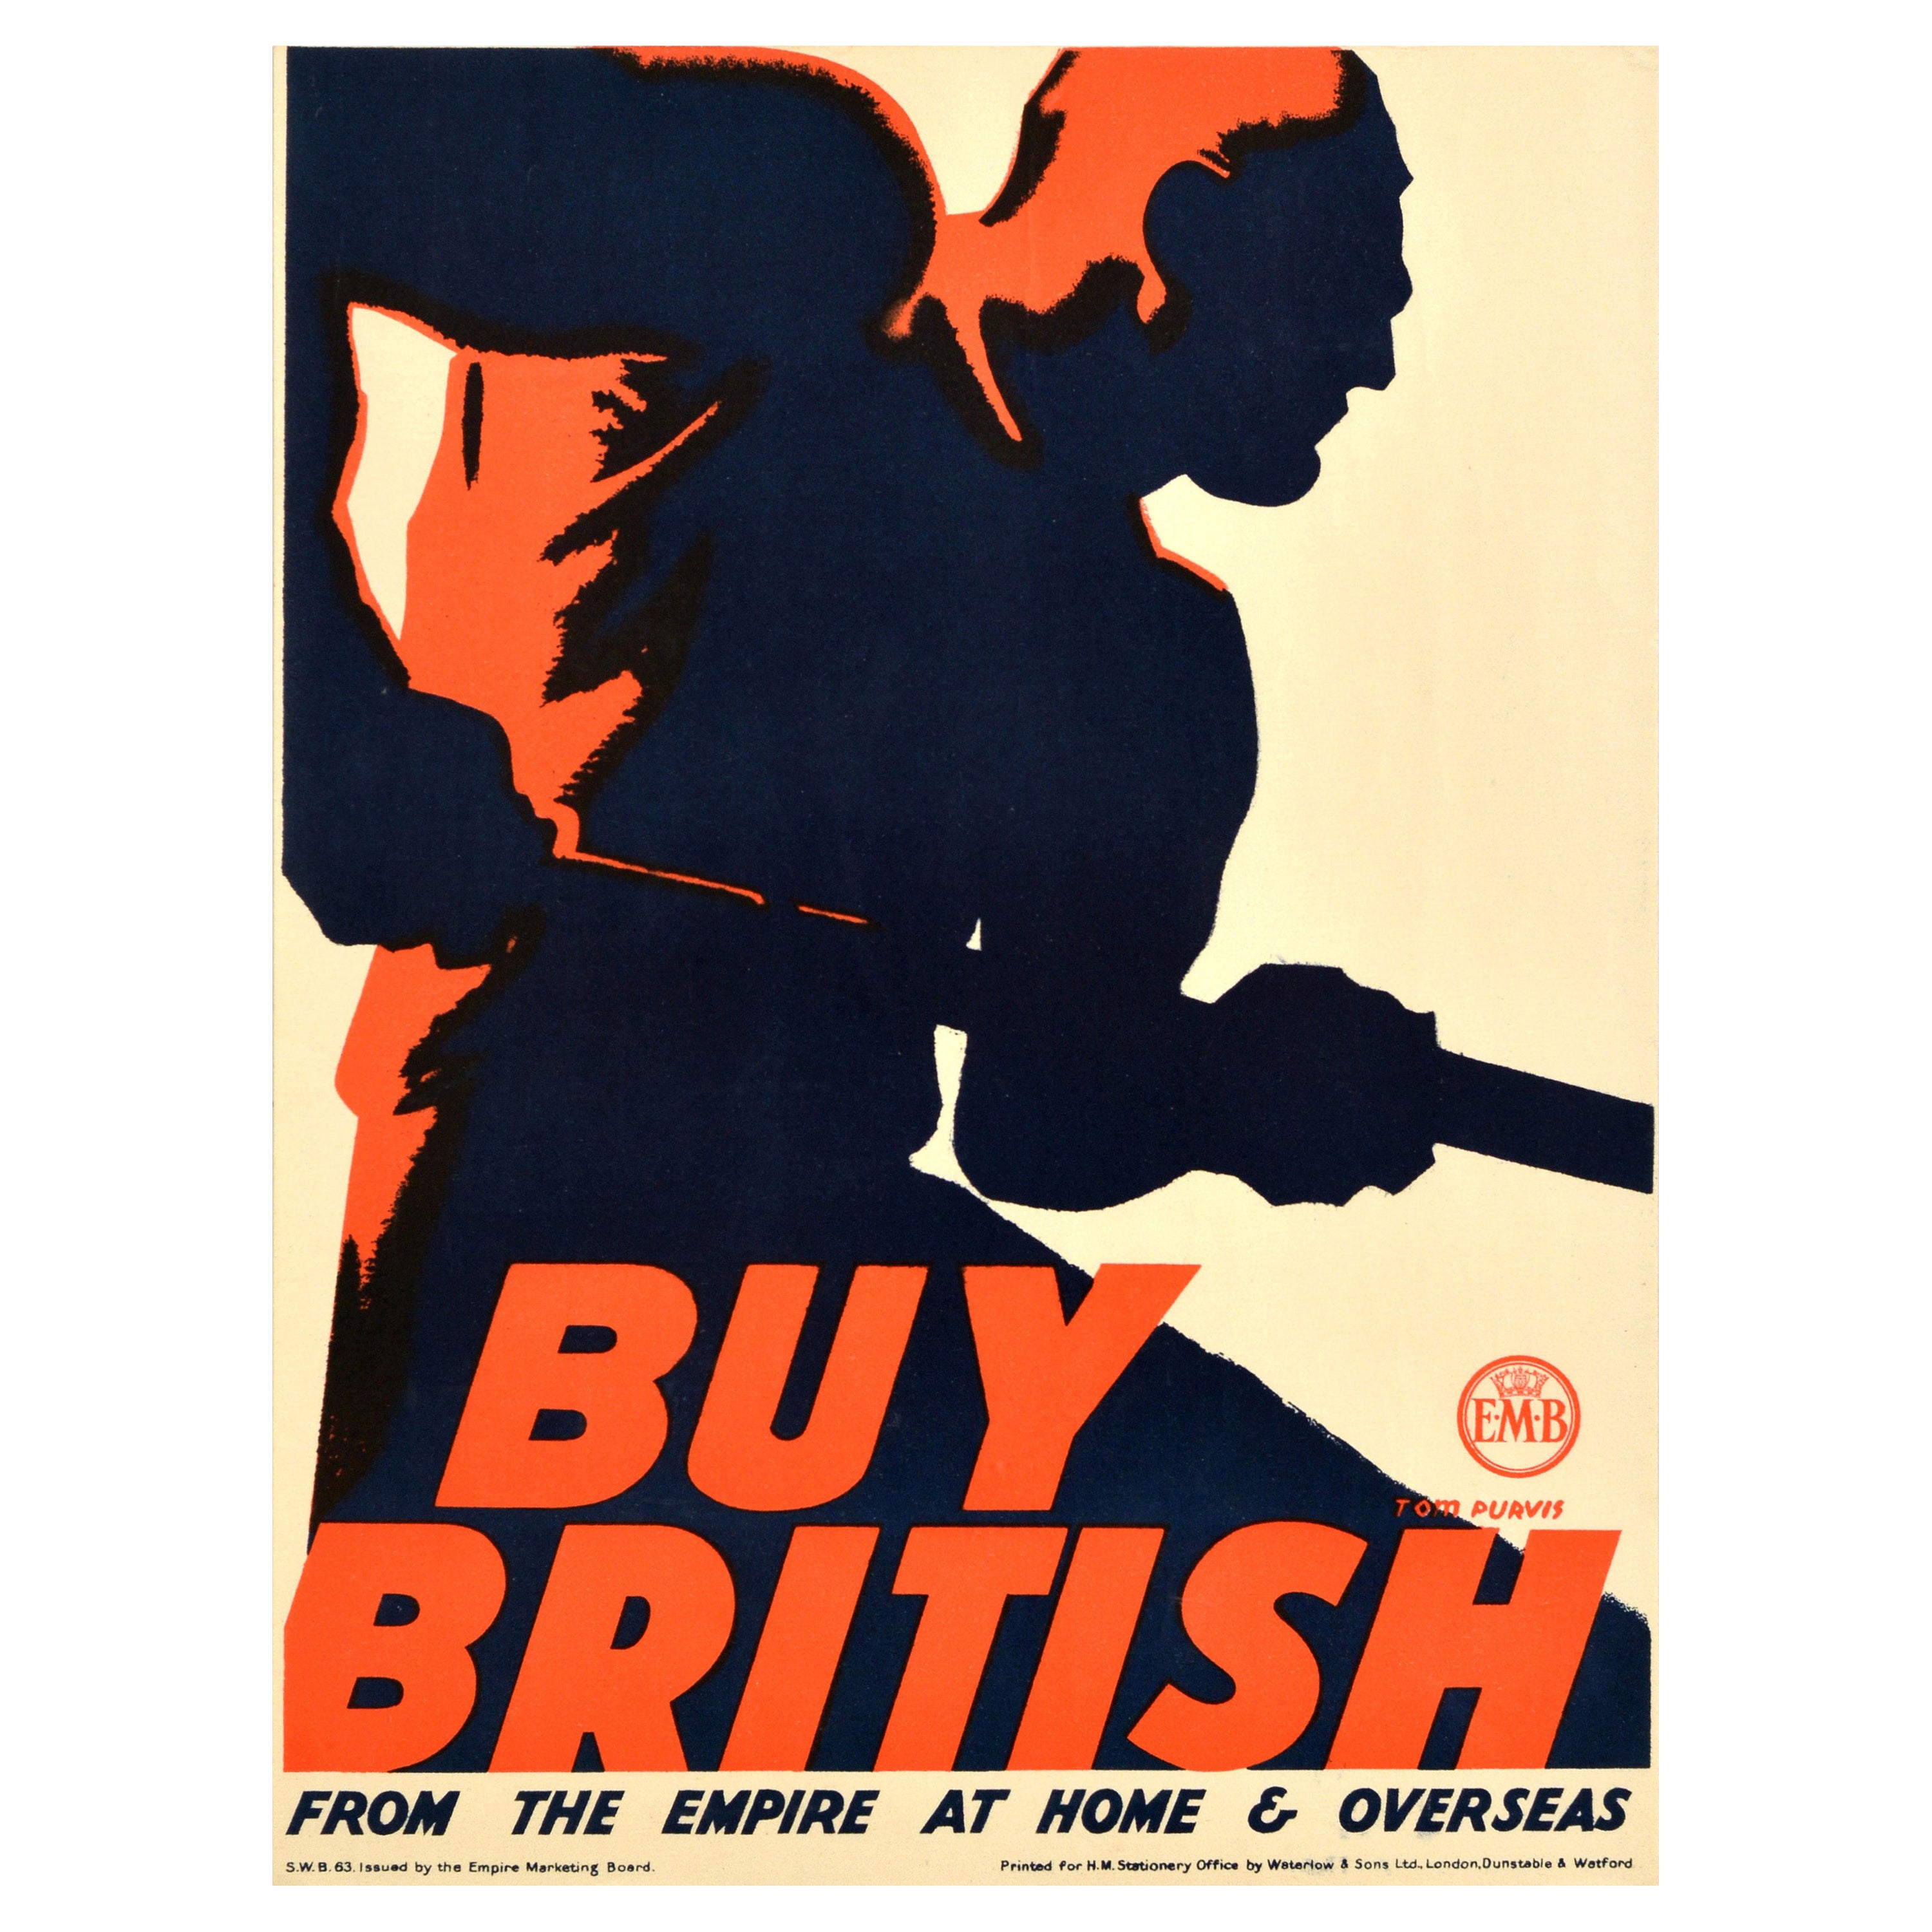 Original Vintage Poster Buy British Tom Purvis EMB Empire Marketing Board For Sale